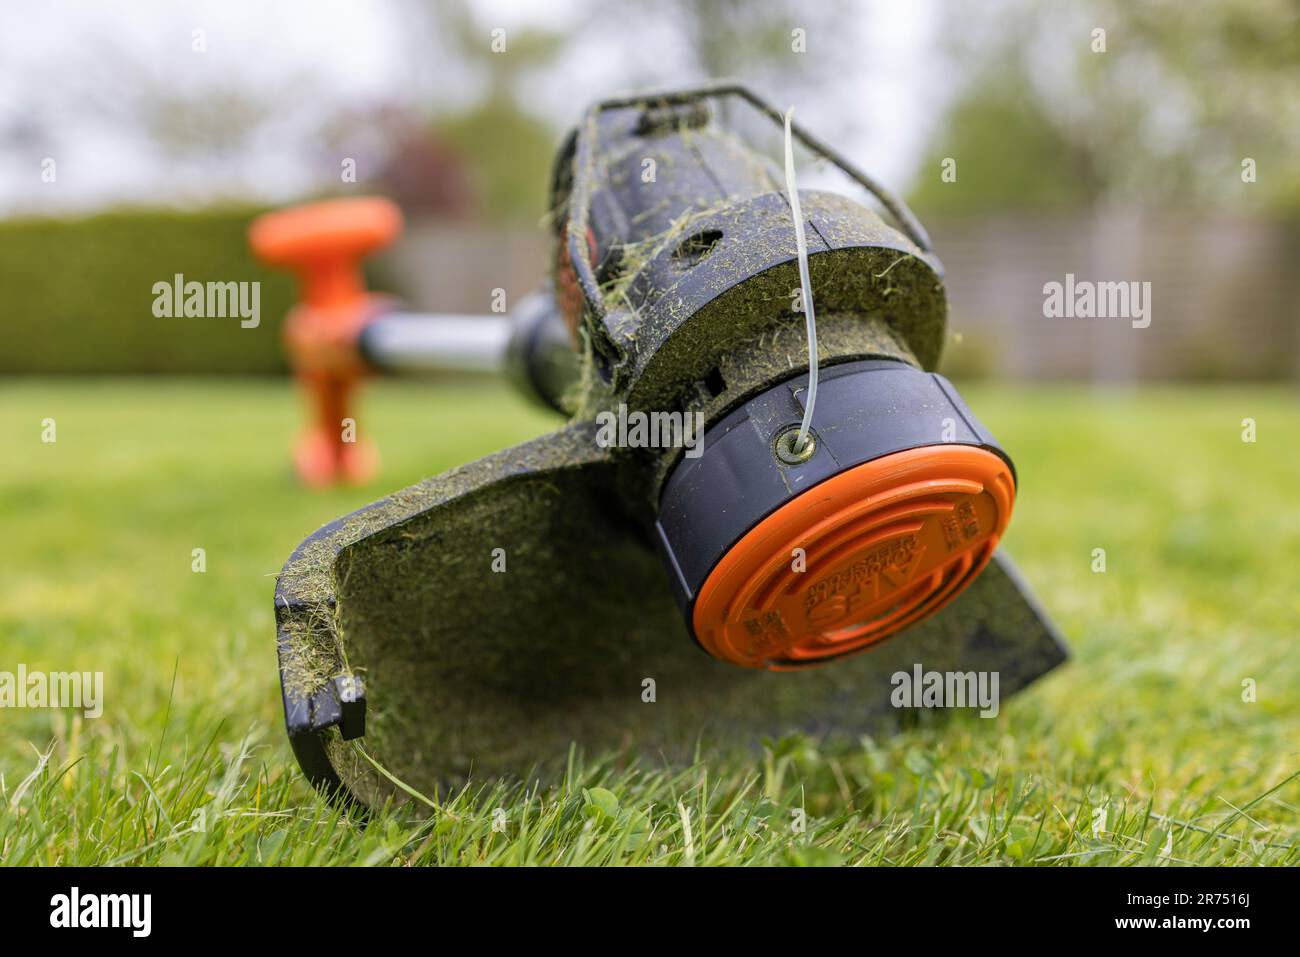 https://c8.alamy.com/comp/2R7516J/black-decker-cordless-lawn-trimmer-string-spool-nylon-fade-lawn-care-garden-2R7516J.jpg